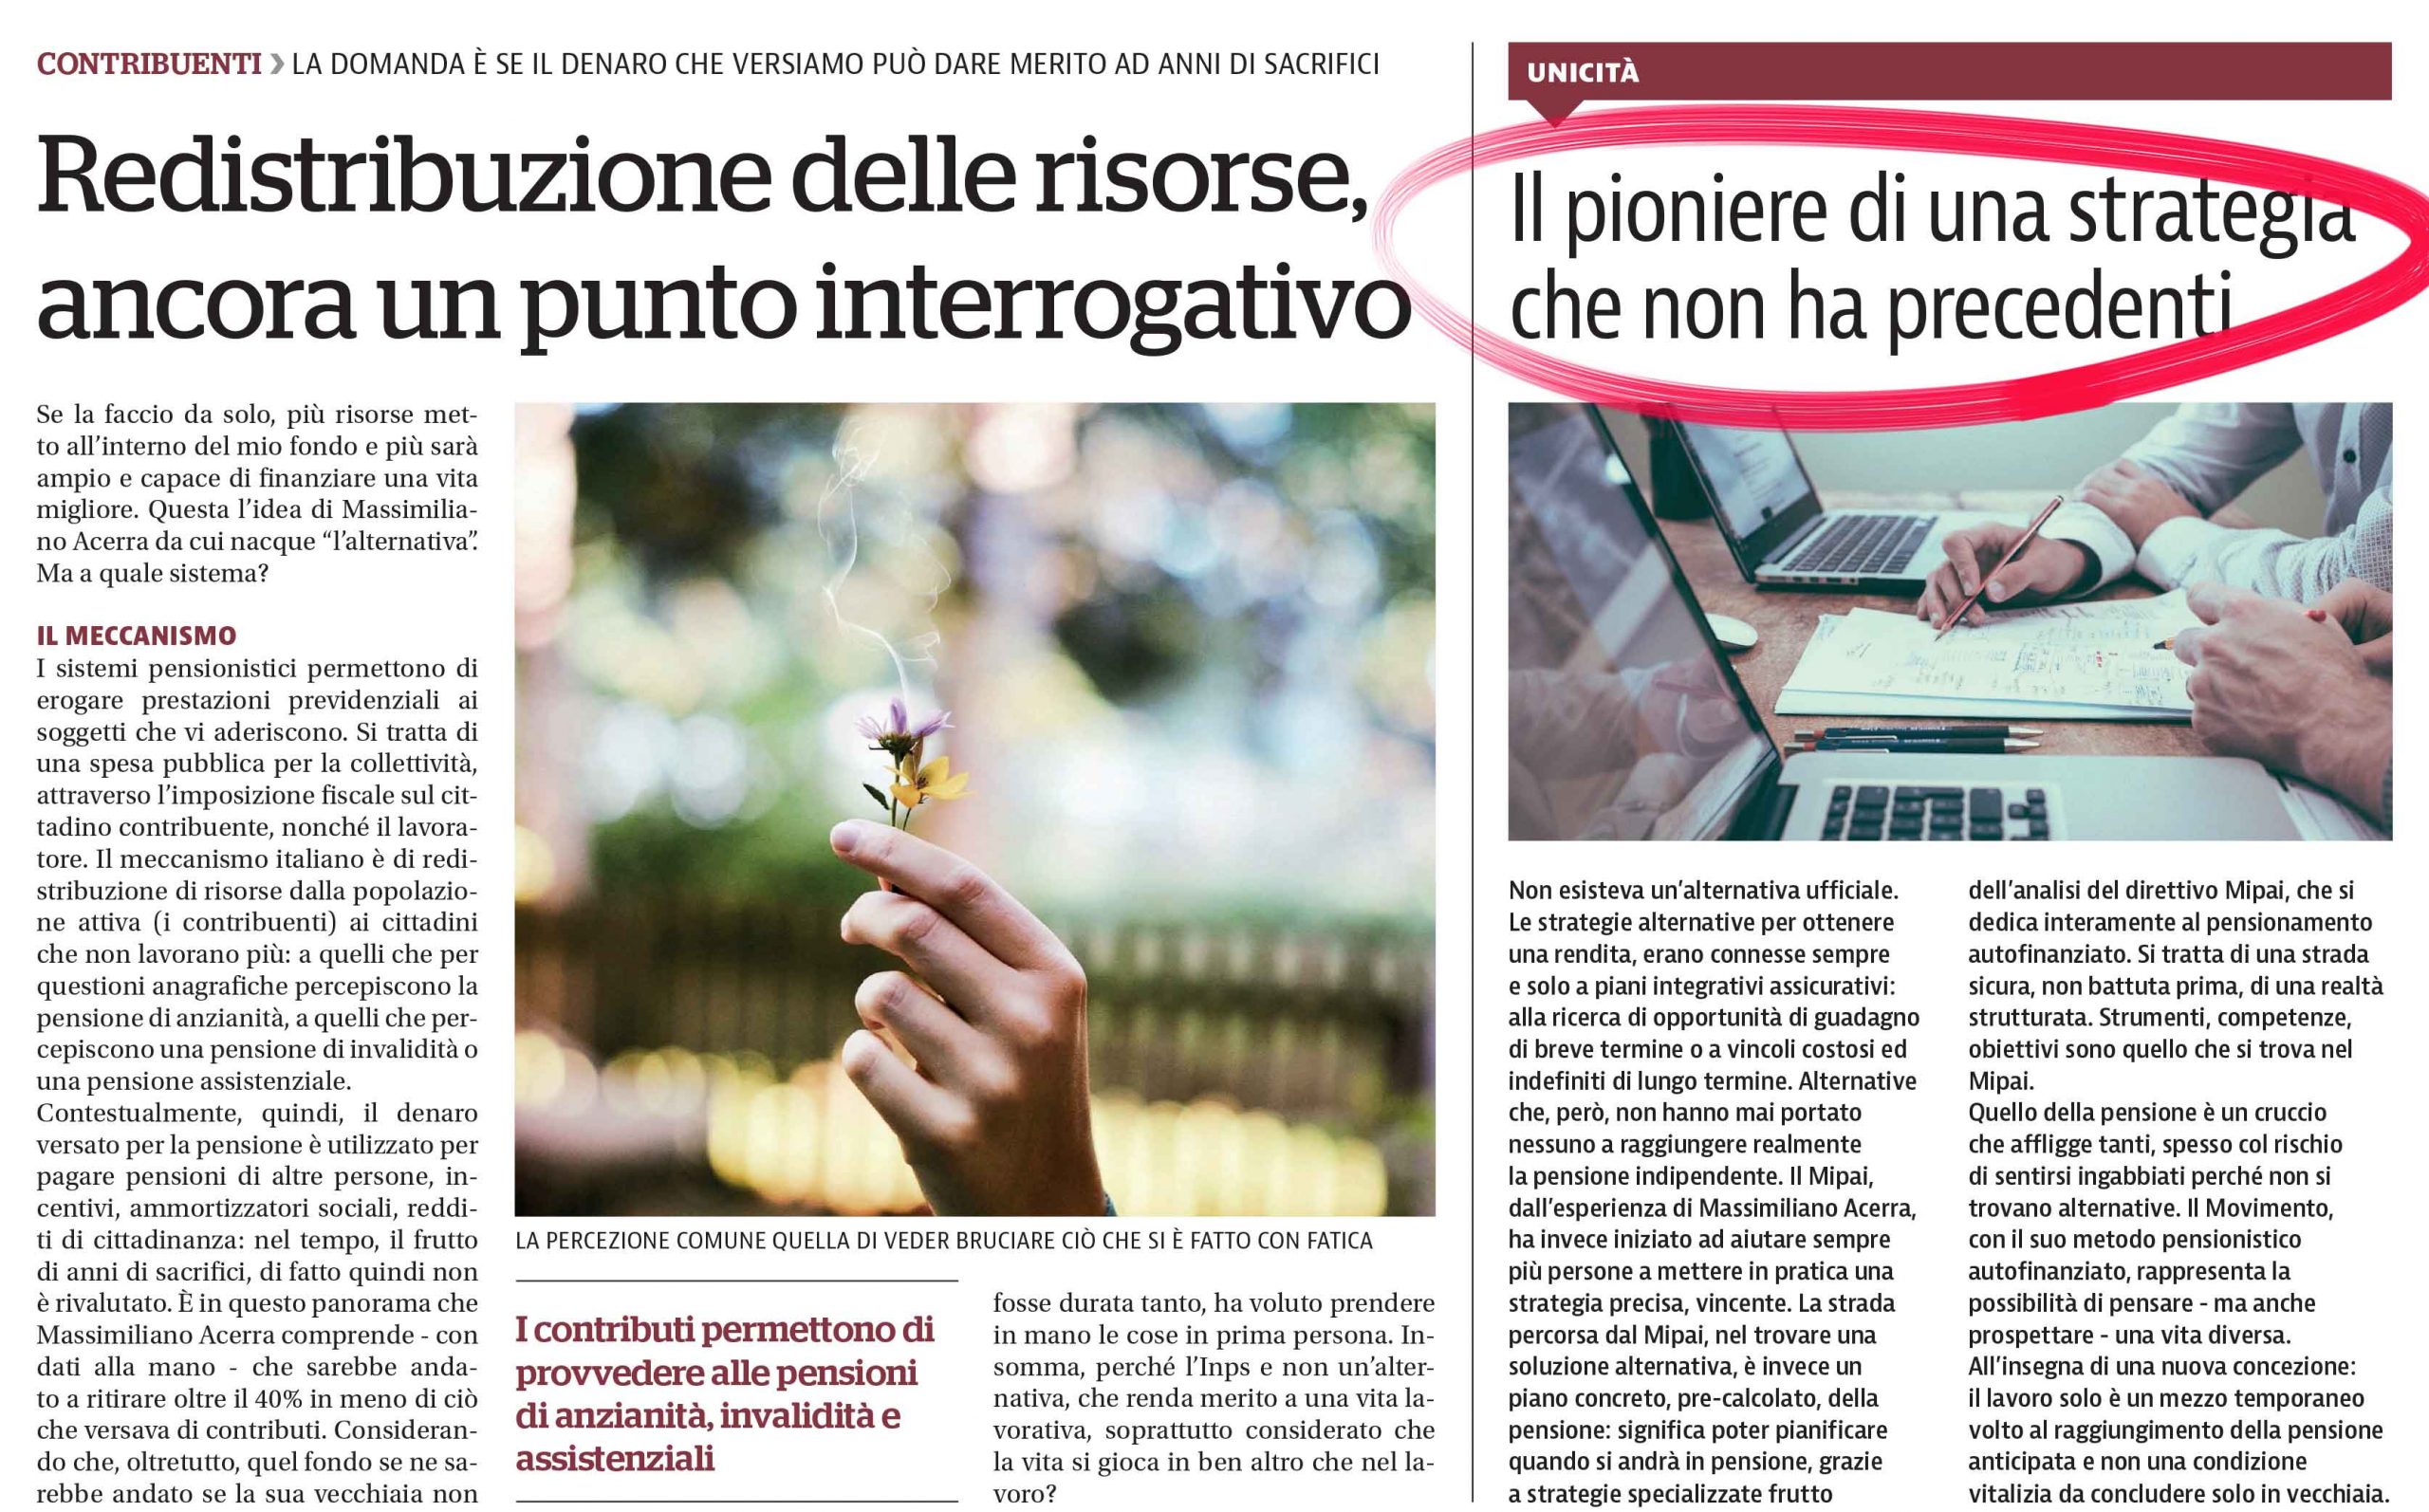 Pagina_Repubblica_pioniere_parte_inf-scaled.jpg